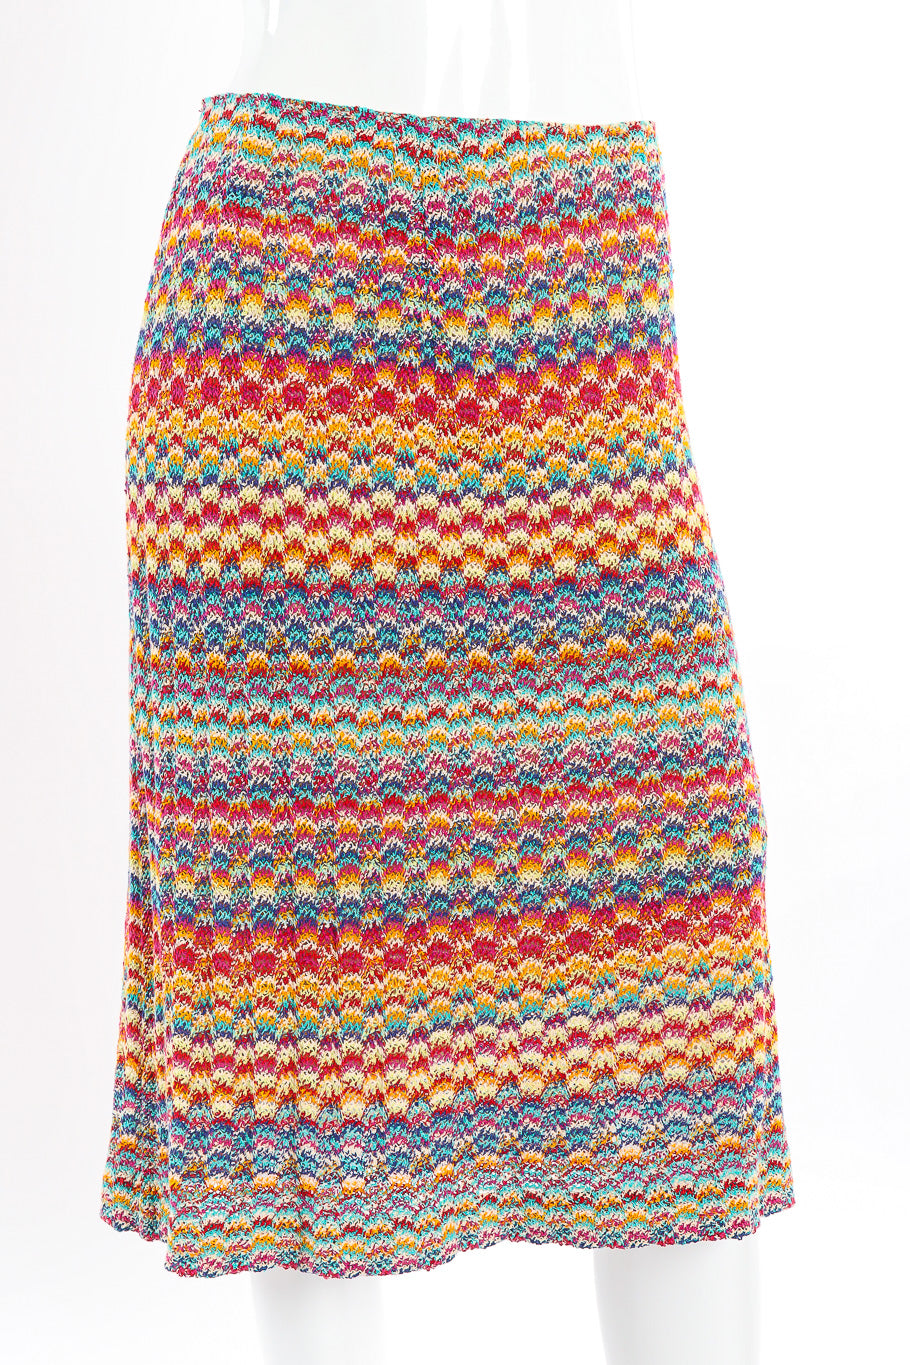 Scallop stripe classic knit 2 piece set by Missoni mannequin skirt only @recessla